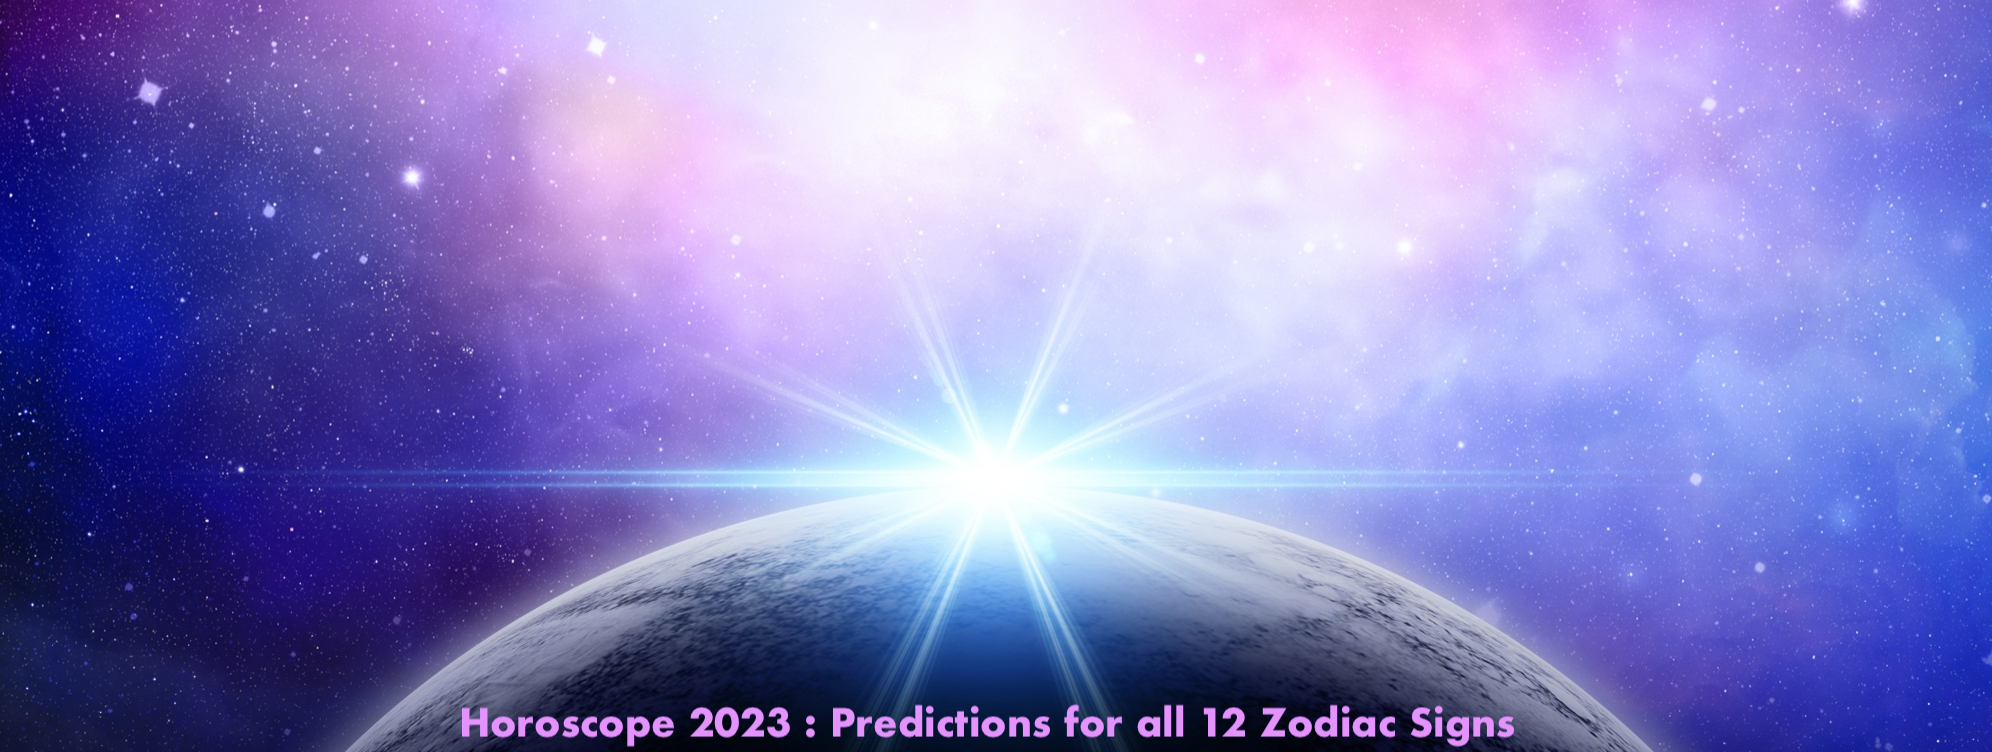 Astrology Prediction 2023 - 12 zodiac signs